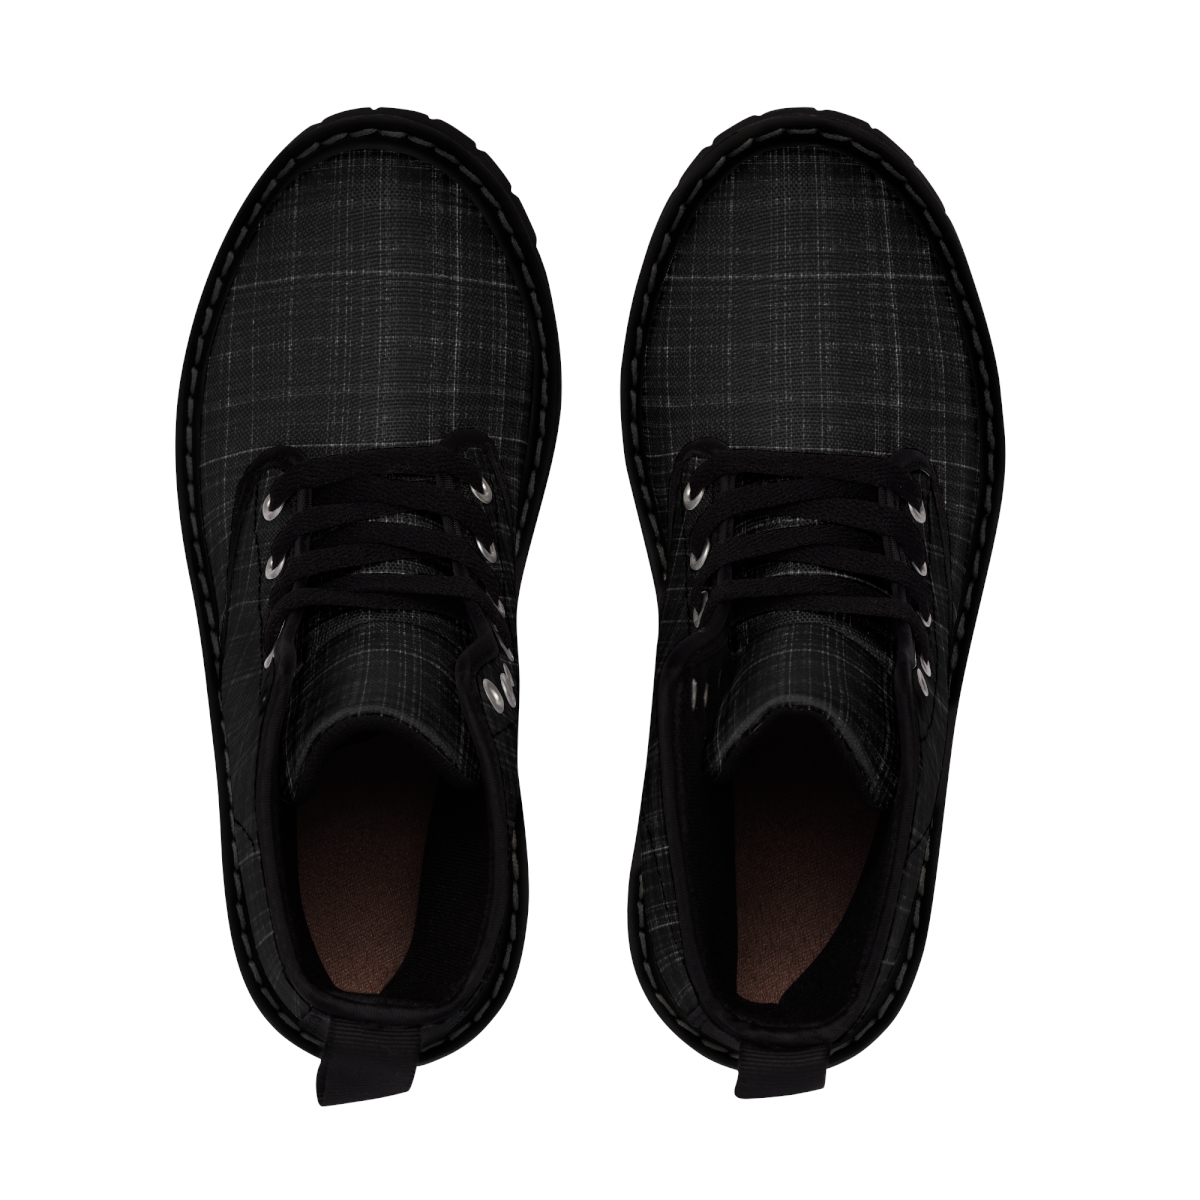 "Old School Tweedish Black & White" Men's Canvas Boots product thumbnail image